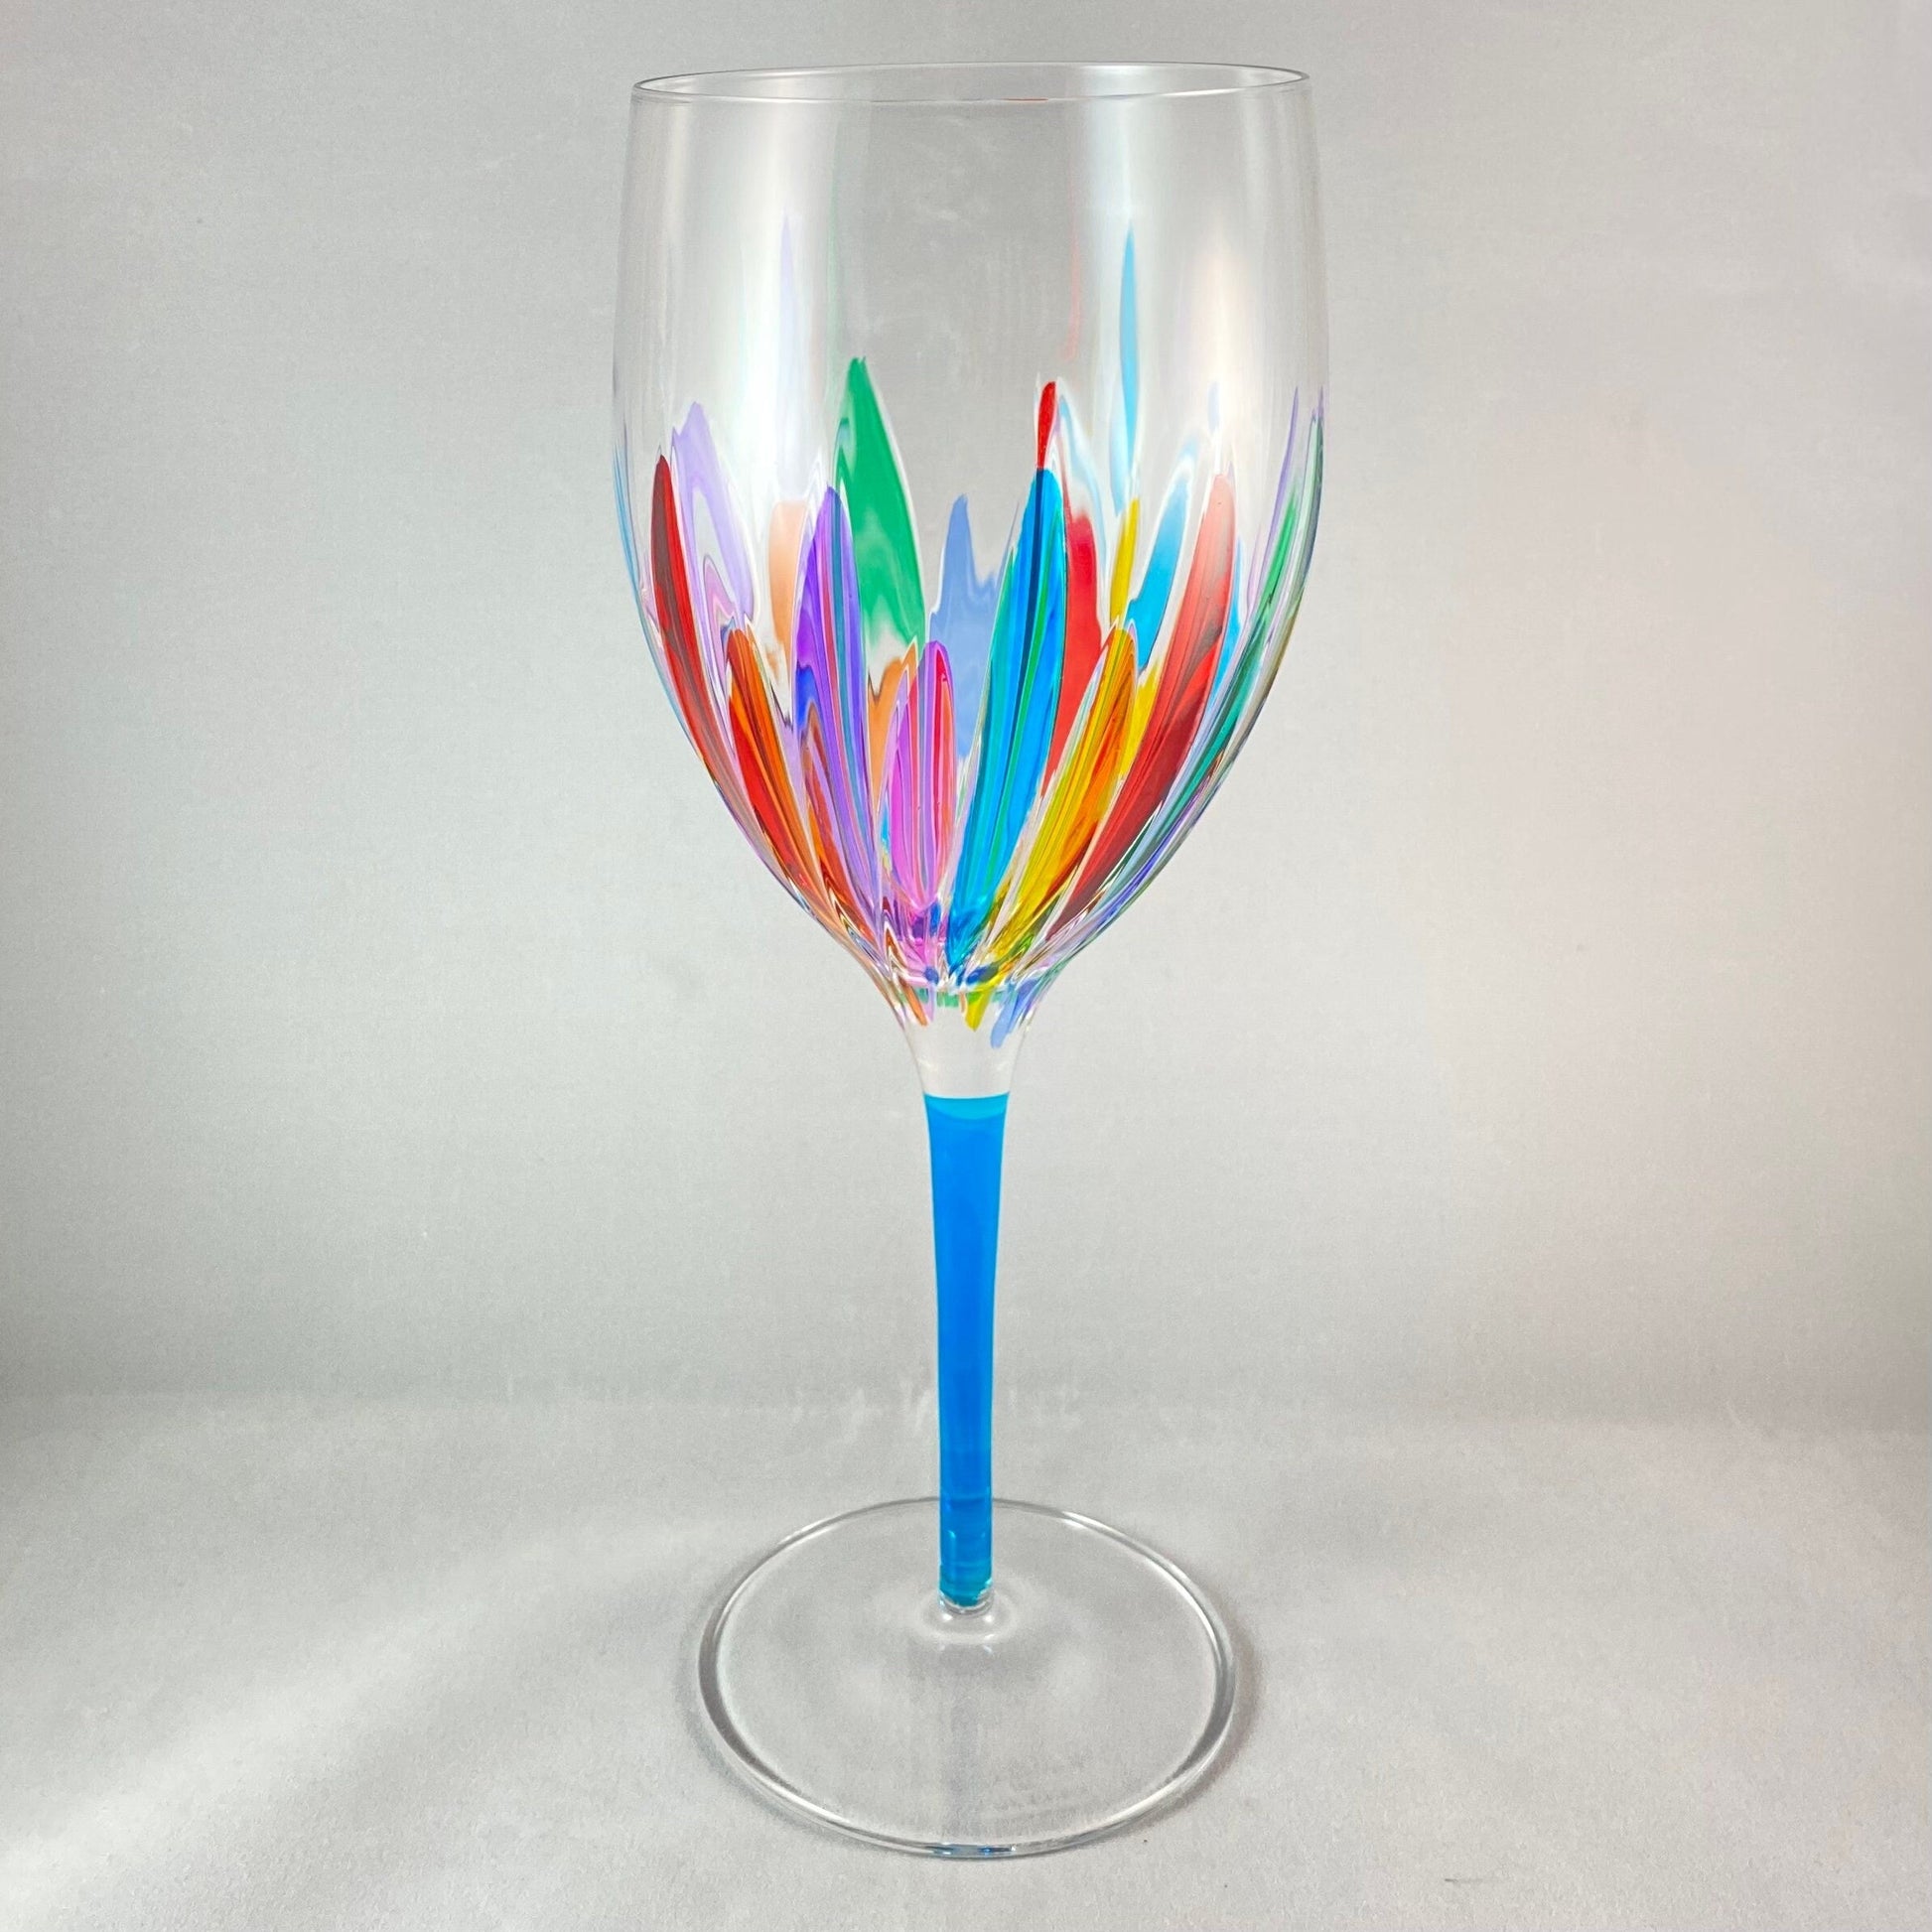 Aqua Blue Stem Venetian Glass Incantos Wine Glass - Handmade in Italy, Colorful Murano Glass